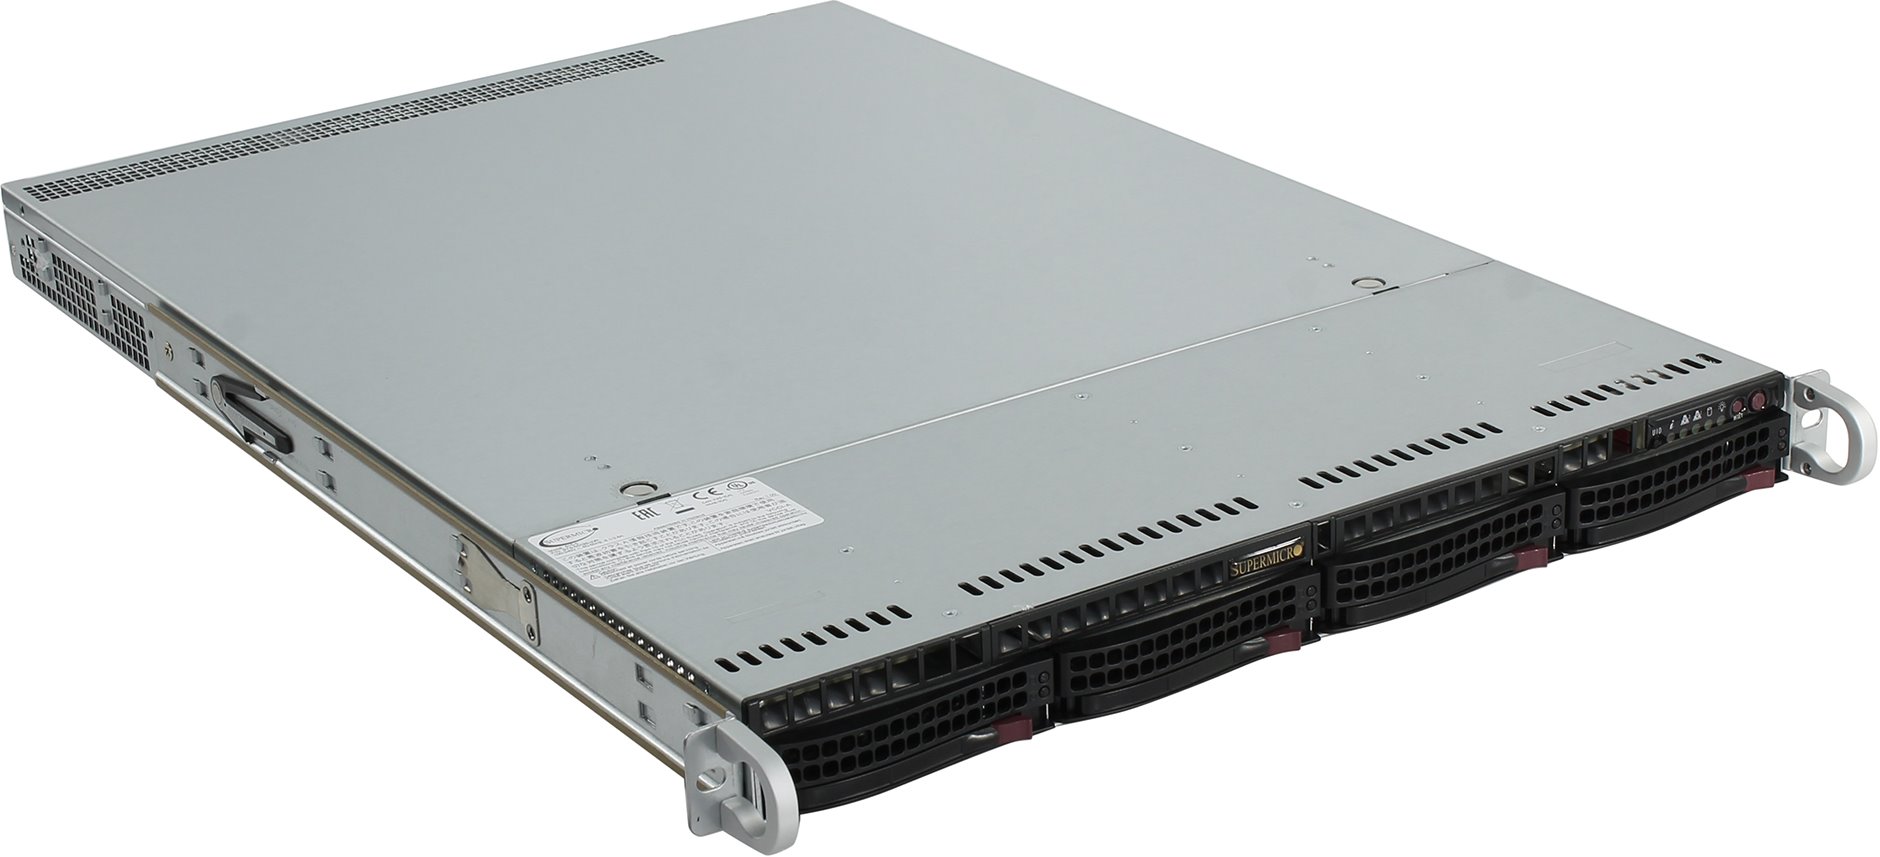 Платформа Supermicro SuperServer 1U 6019P-WT noCPU(2)Scalable/TDP 70-165W/ no DIMM(12)/ SATARAID HDD(4)LFF/2xGbE/ 2xFH, 1xLP, M2/ 1x600W